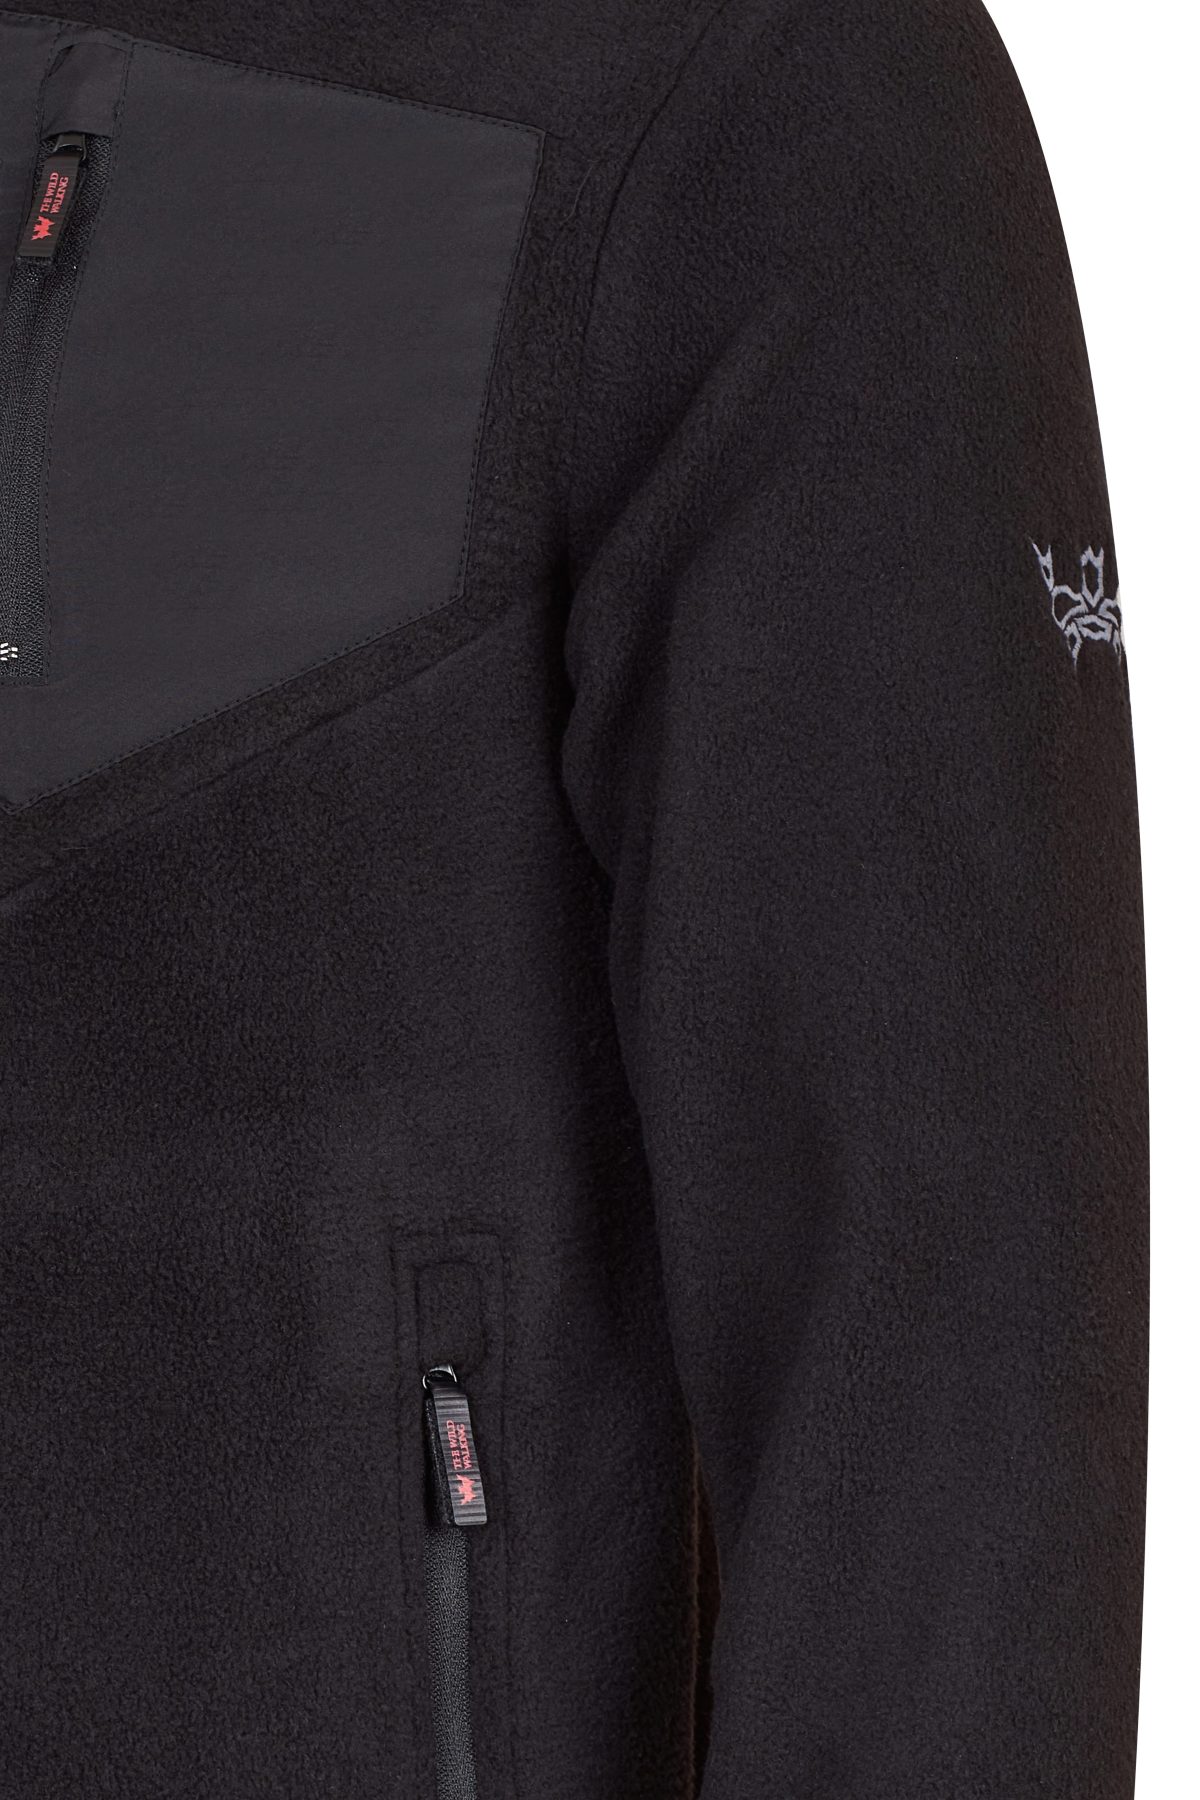 Stylish Fleece with Embroidered Logo – Black-3593